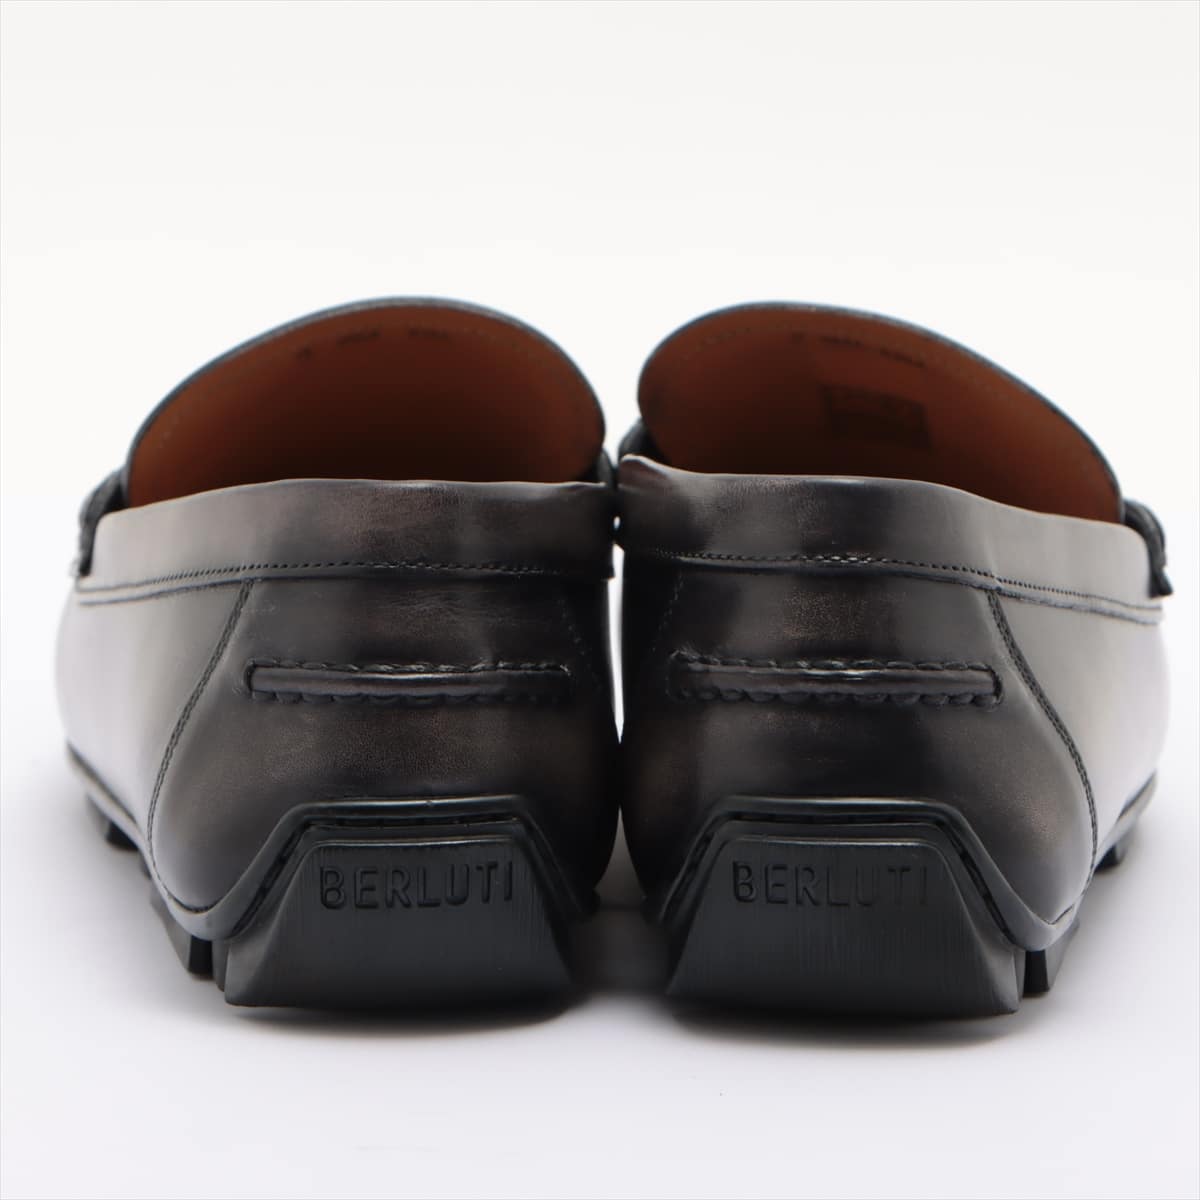 Berluti Calligraphy Leather Driving shoes 9 Men's Black Saturnans